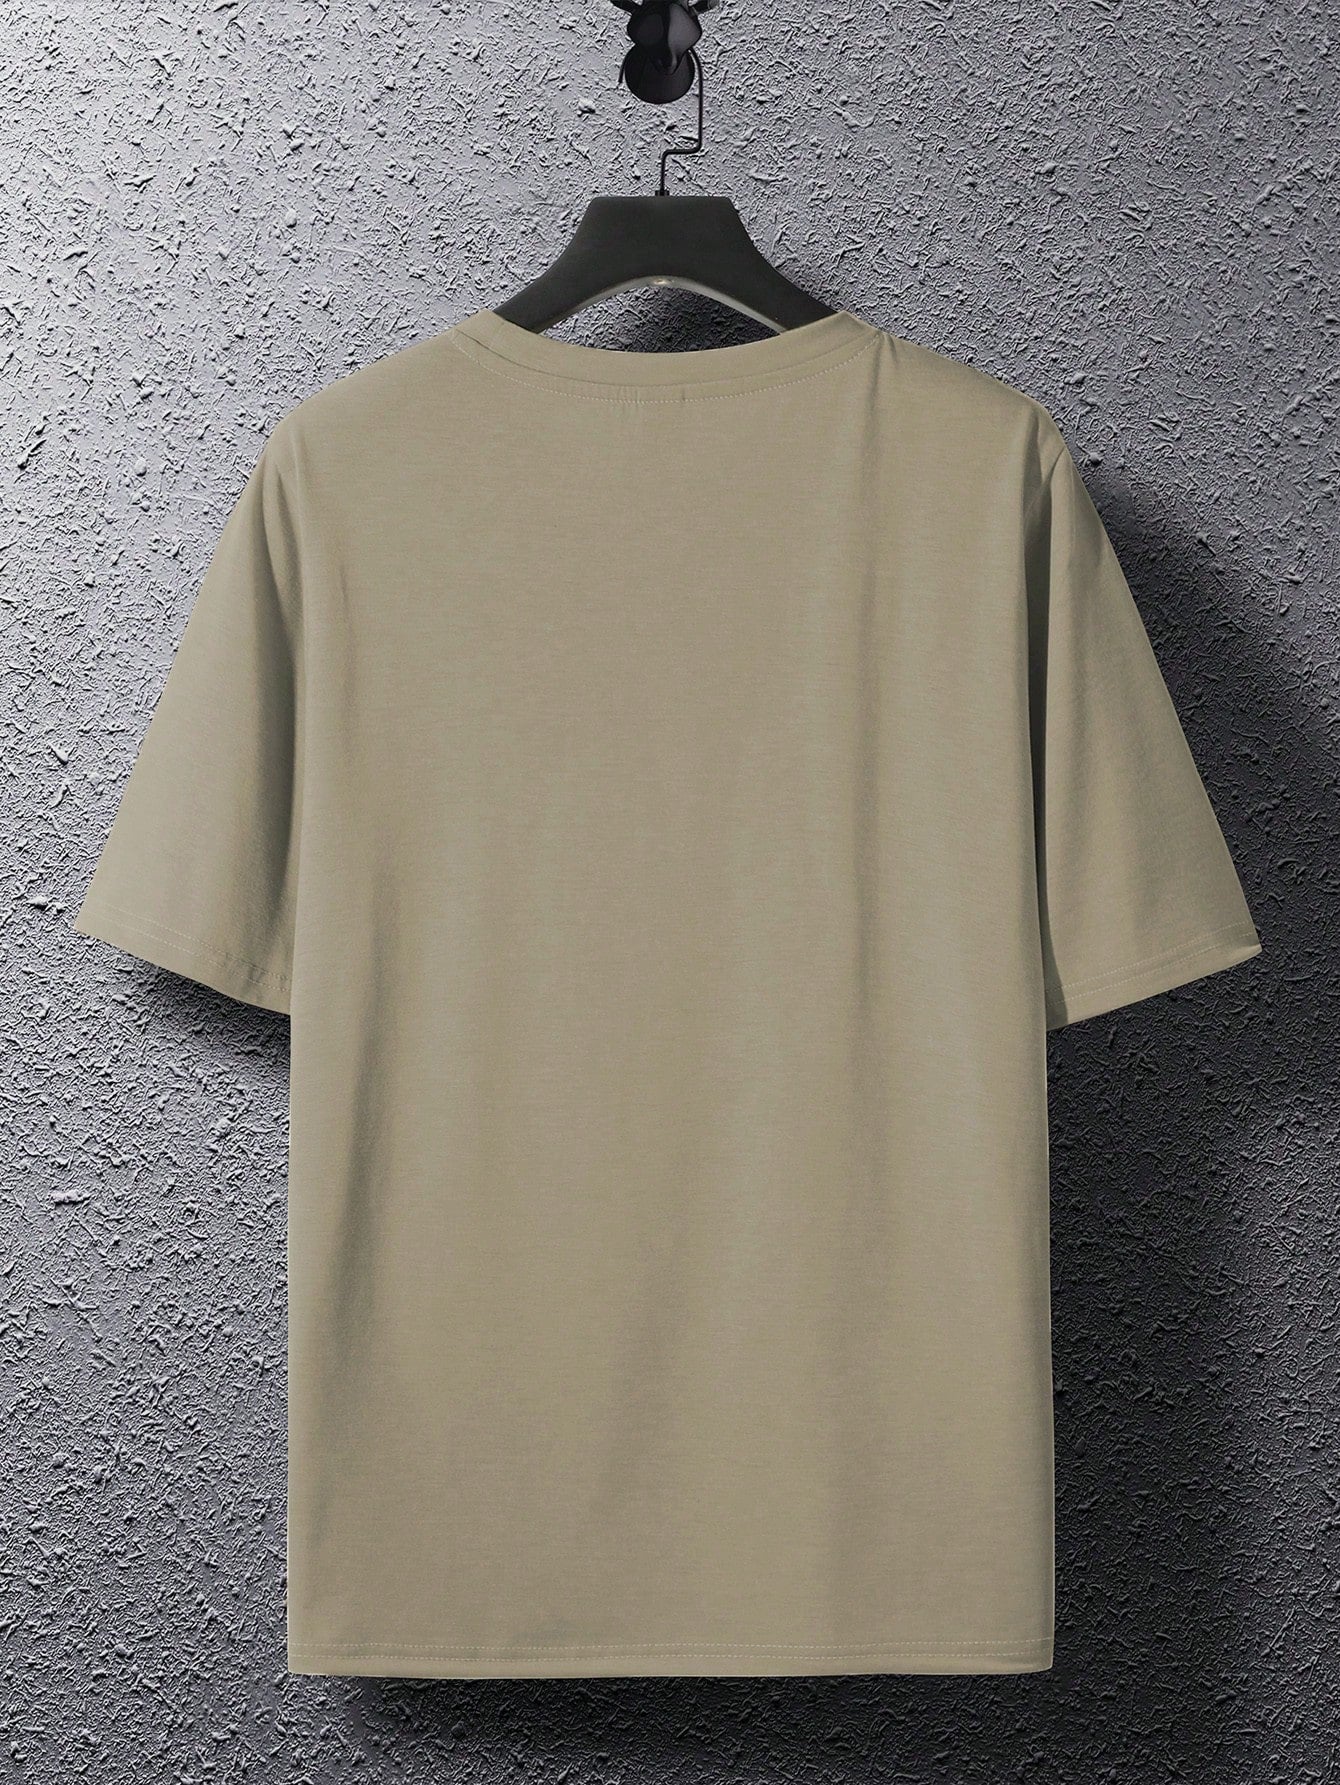 Men's Casual Summer Slogan T-Shirt, Short Sleeve, Round Neck